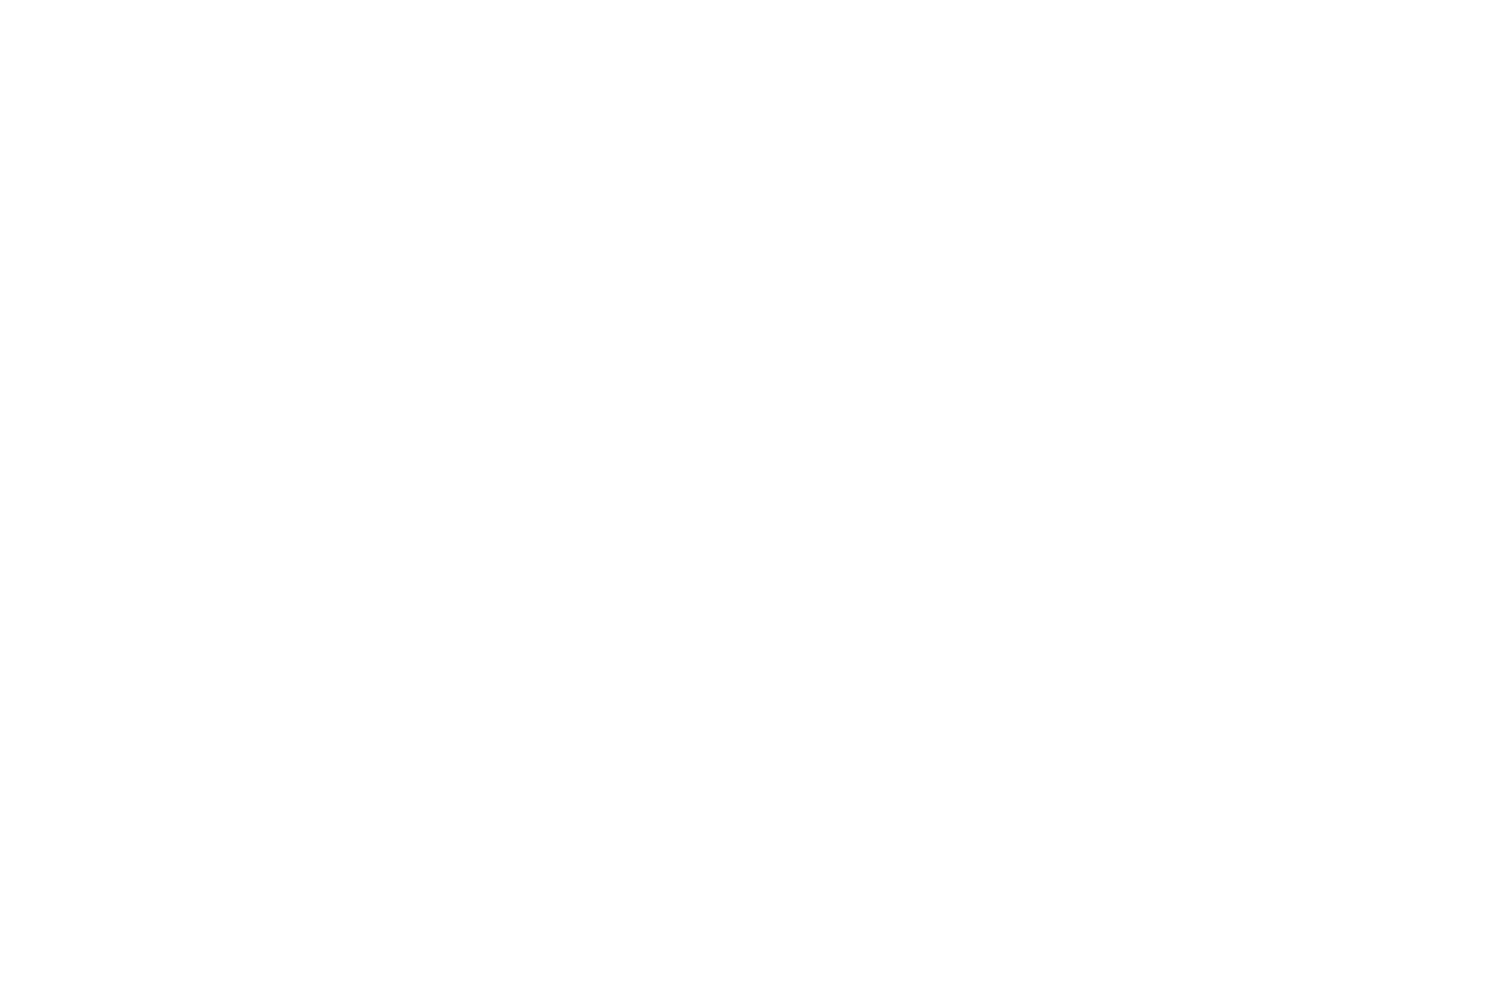 TRUE CREATIVE HOUSE